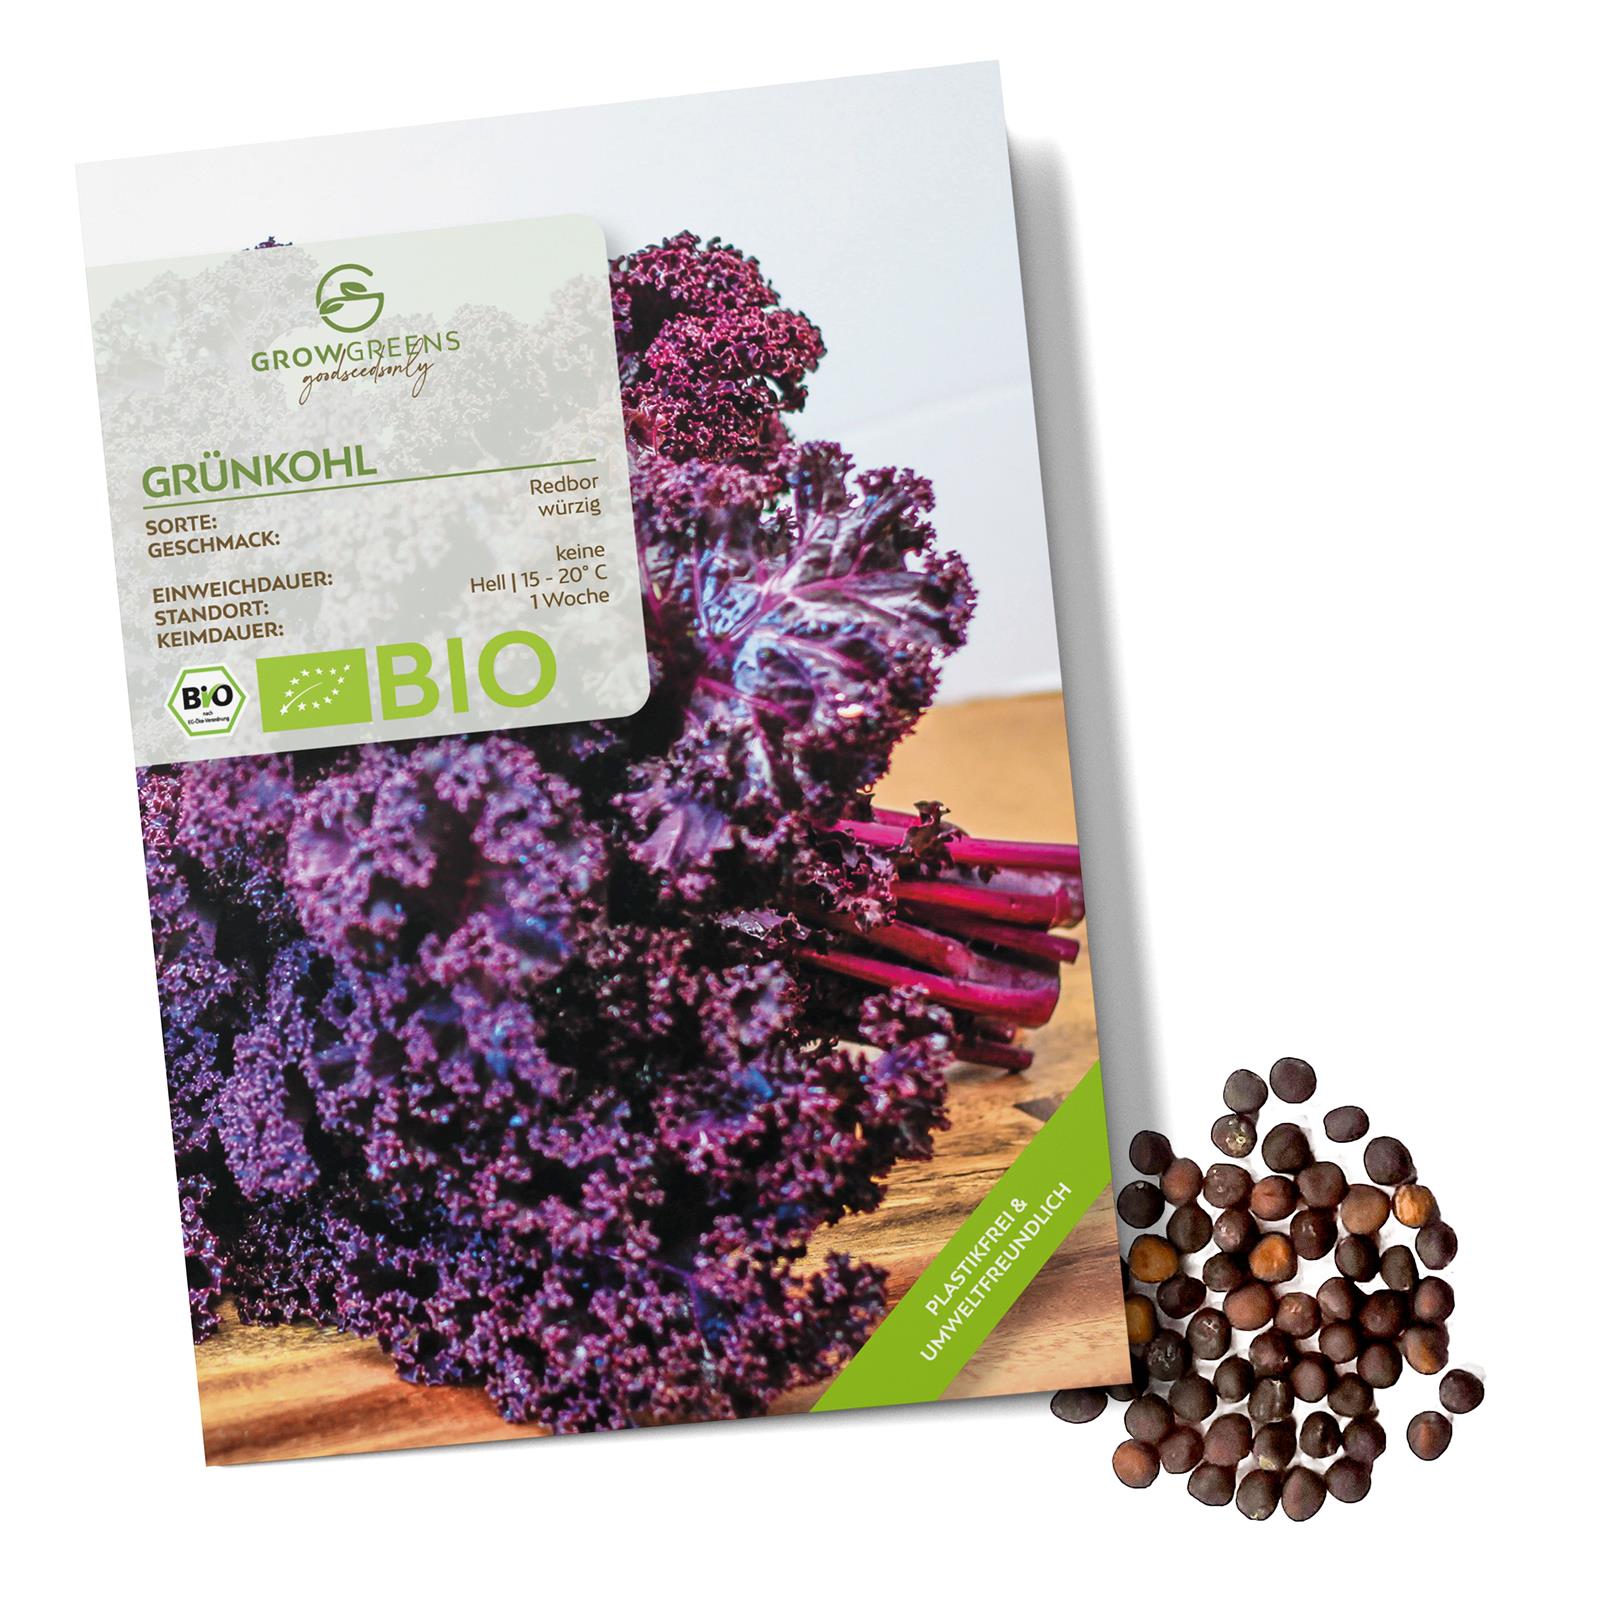 BIO Grünkohl Samen (Redbor) - Grünkohl Saatgut aus biologischem Anbau (25 Korn)